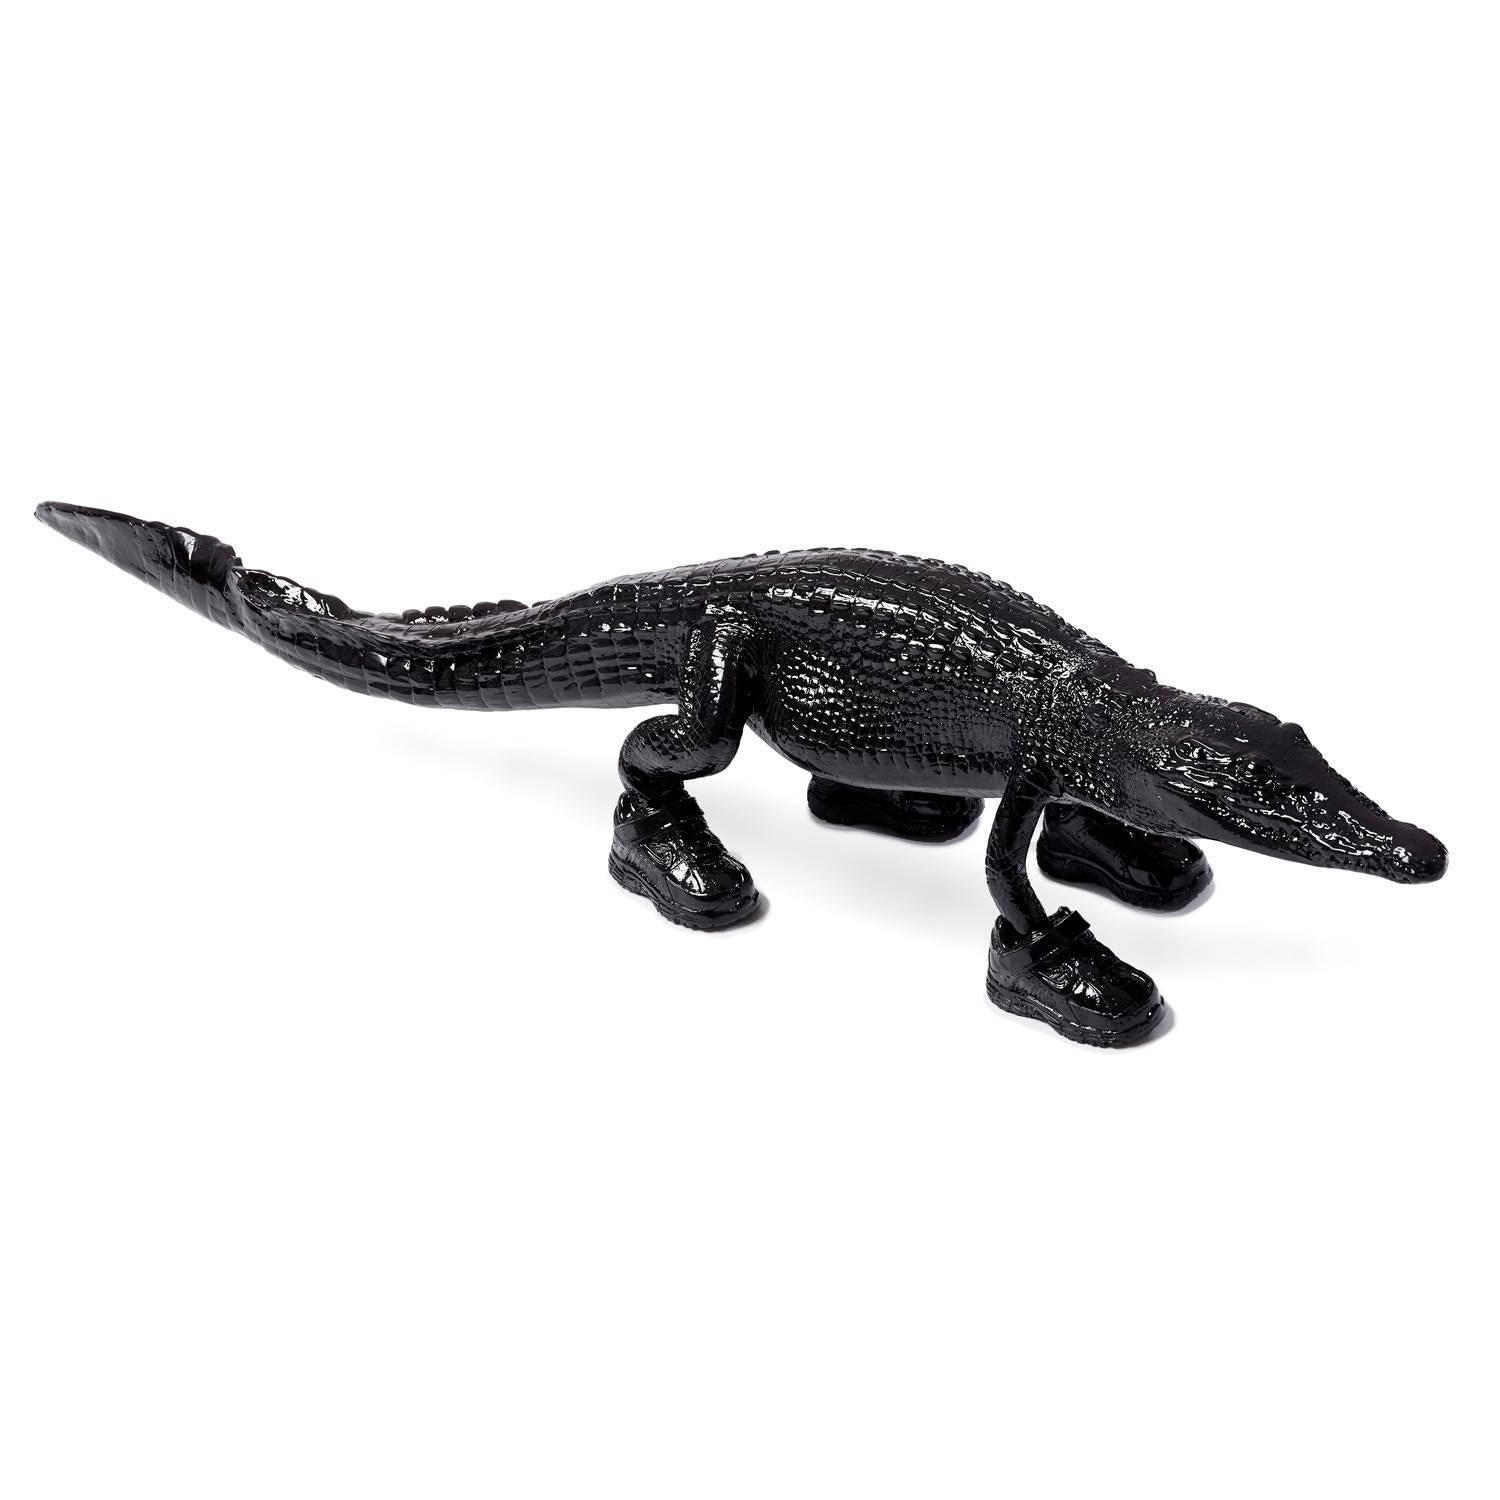 William Sweetlove Figurative Sculpture - Cloned Alligator with sneakers black